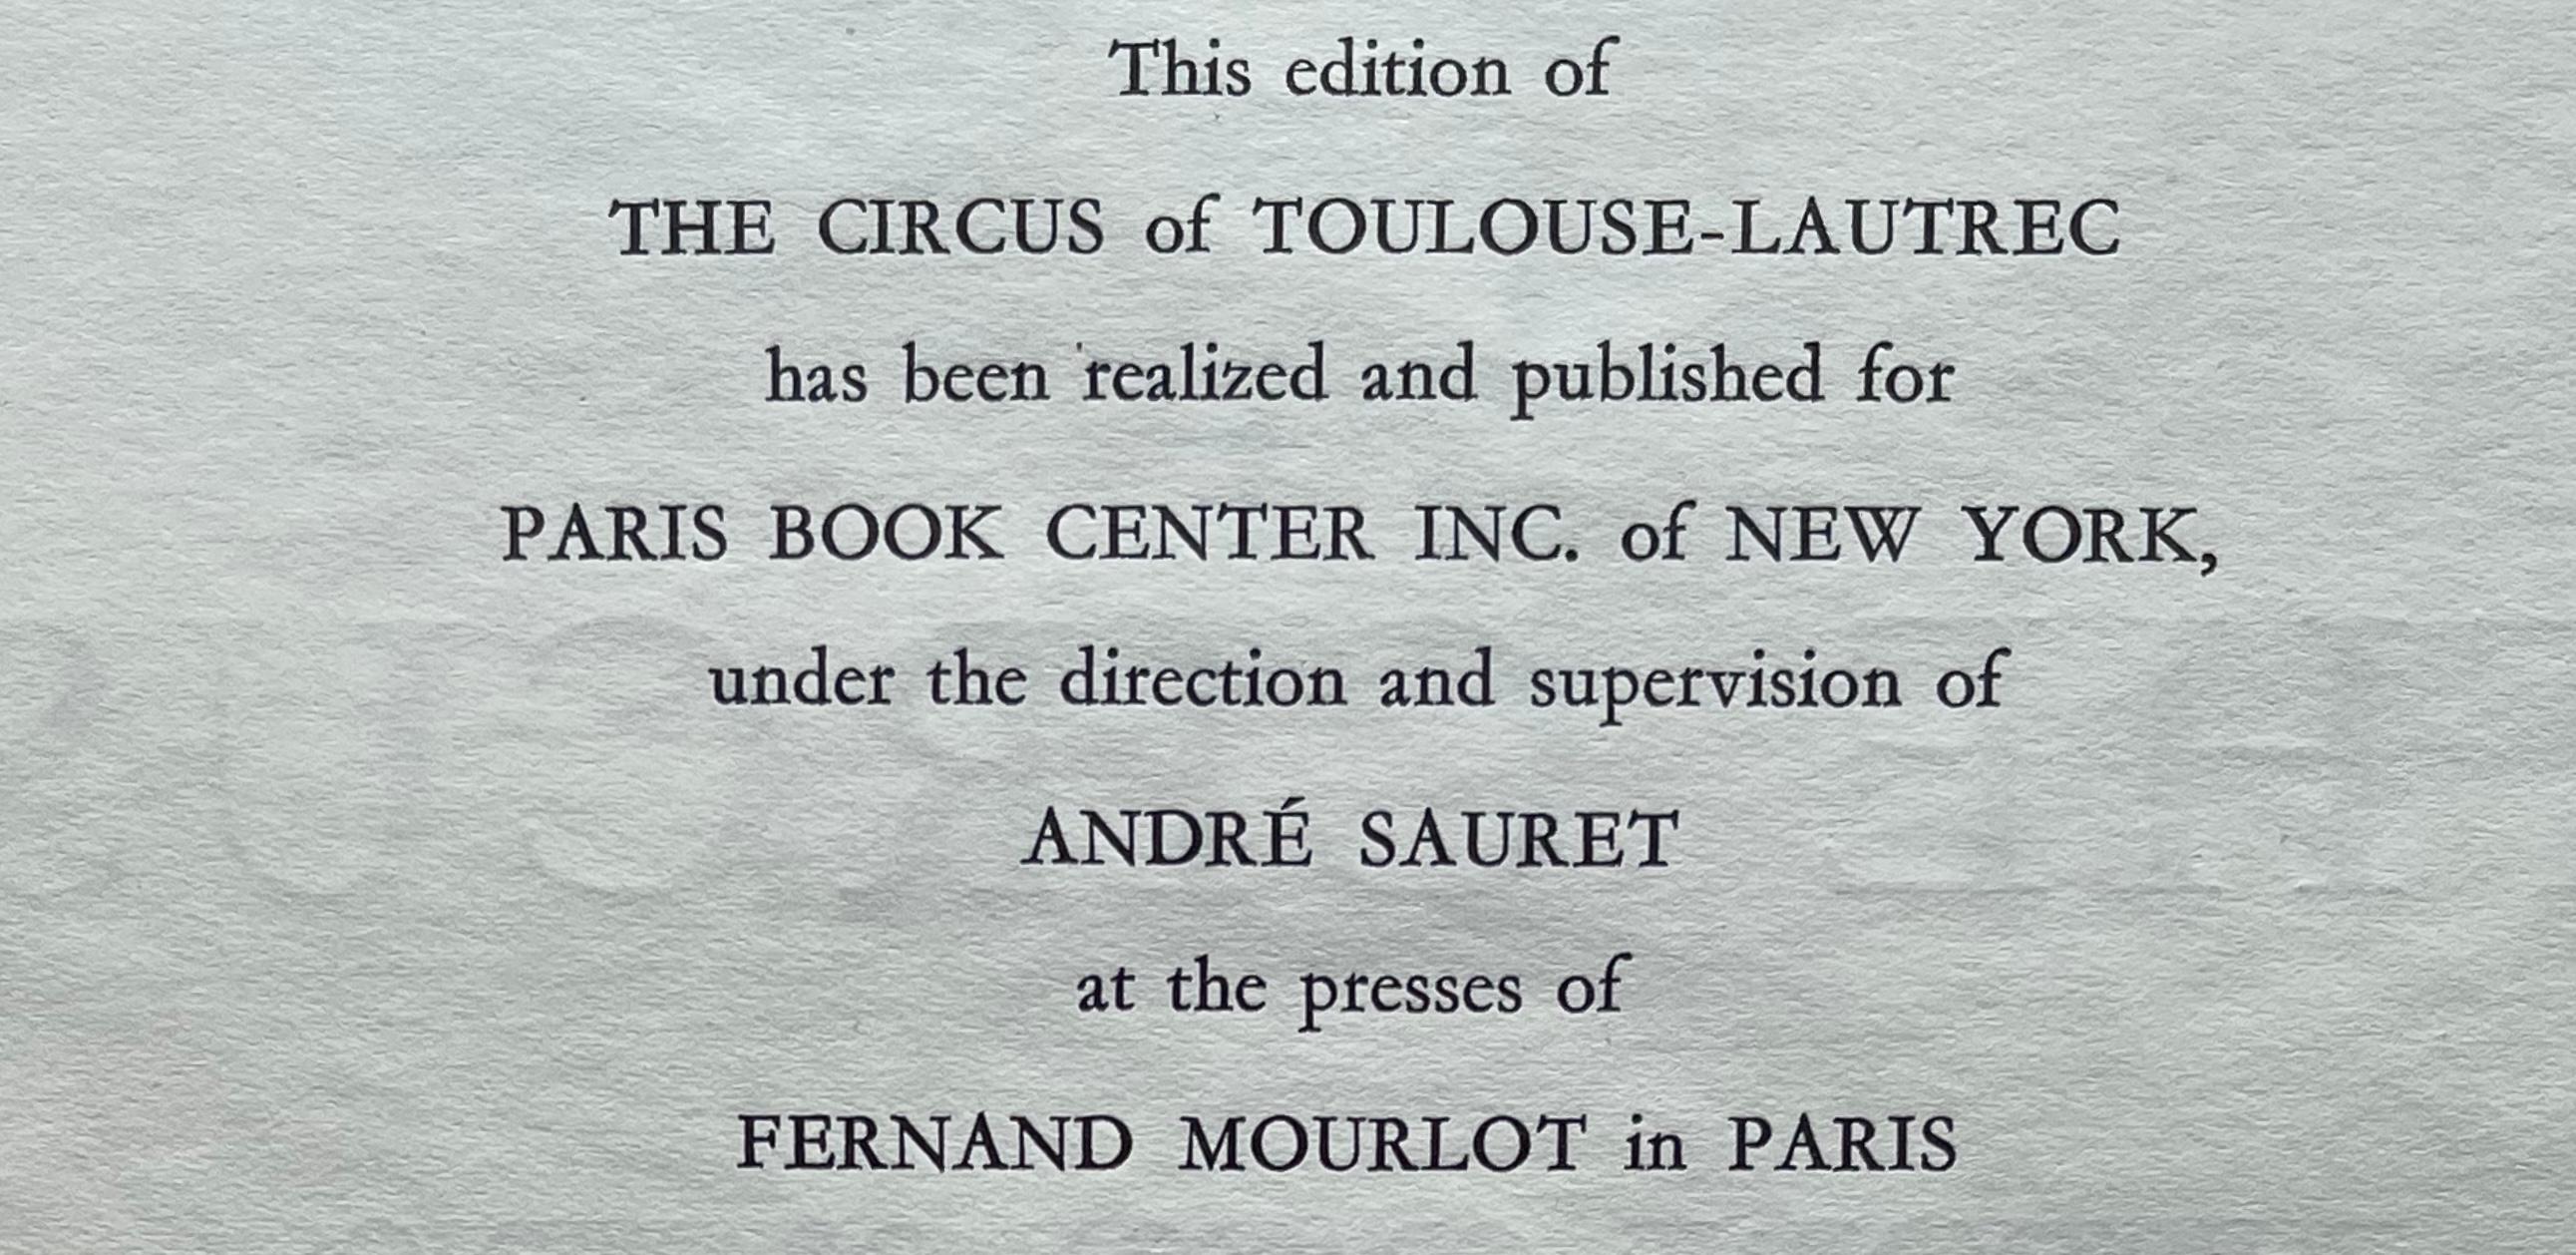 Toulouse-Lautrec, Le trapeze volant, The Circus by Toulouse-Lautrec (after) For Sale 2